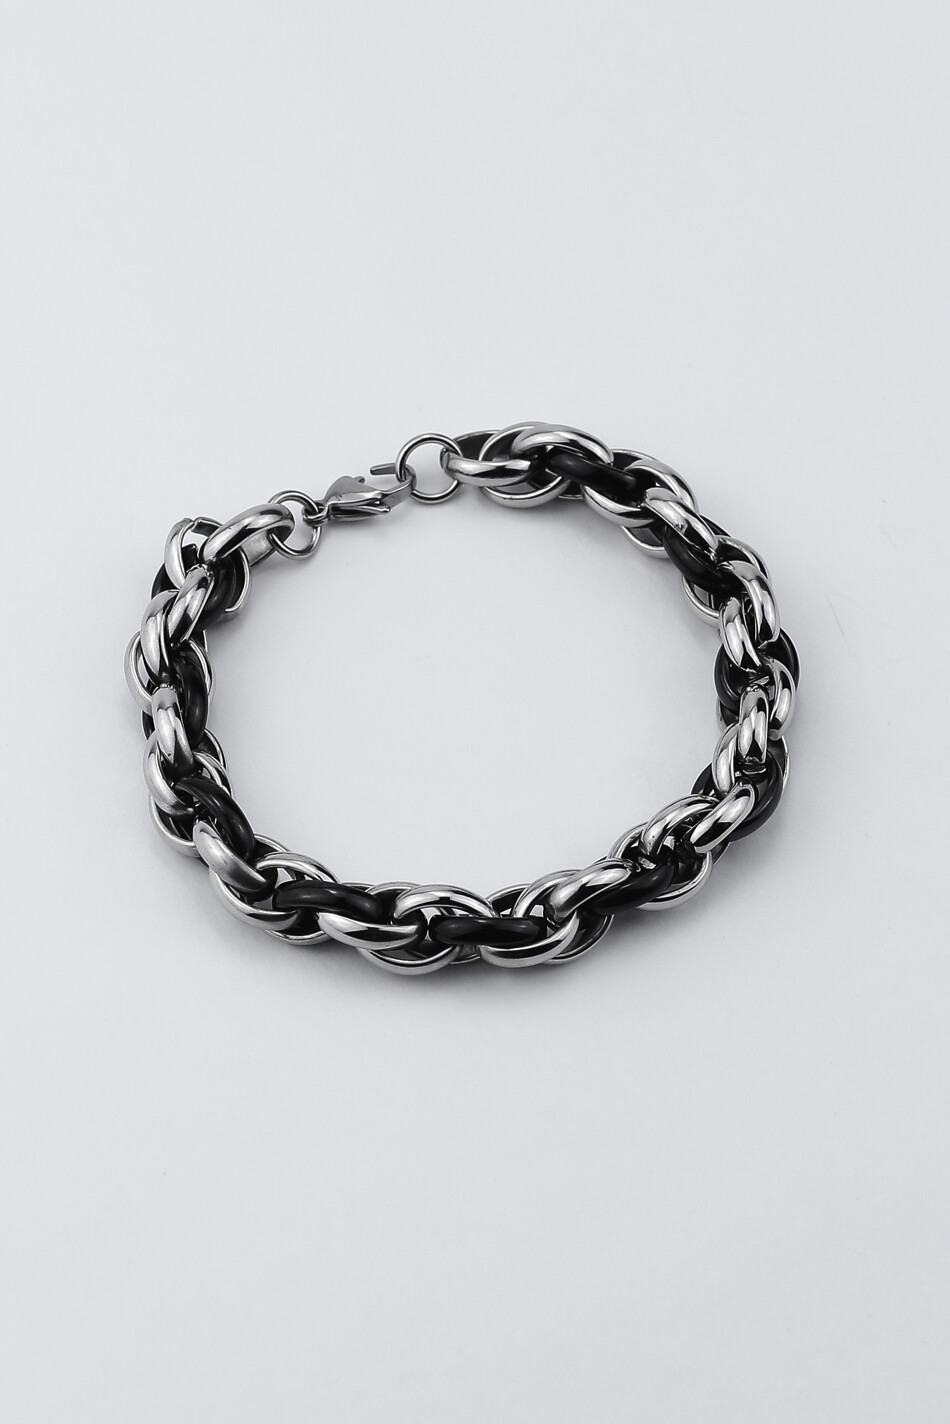 Cord bracelet with a black link